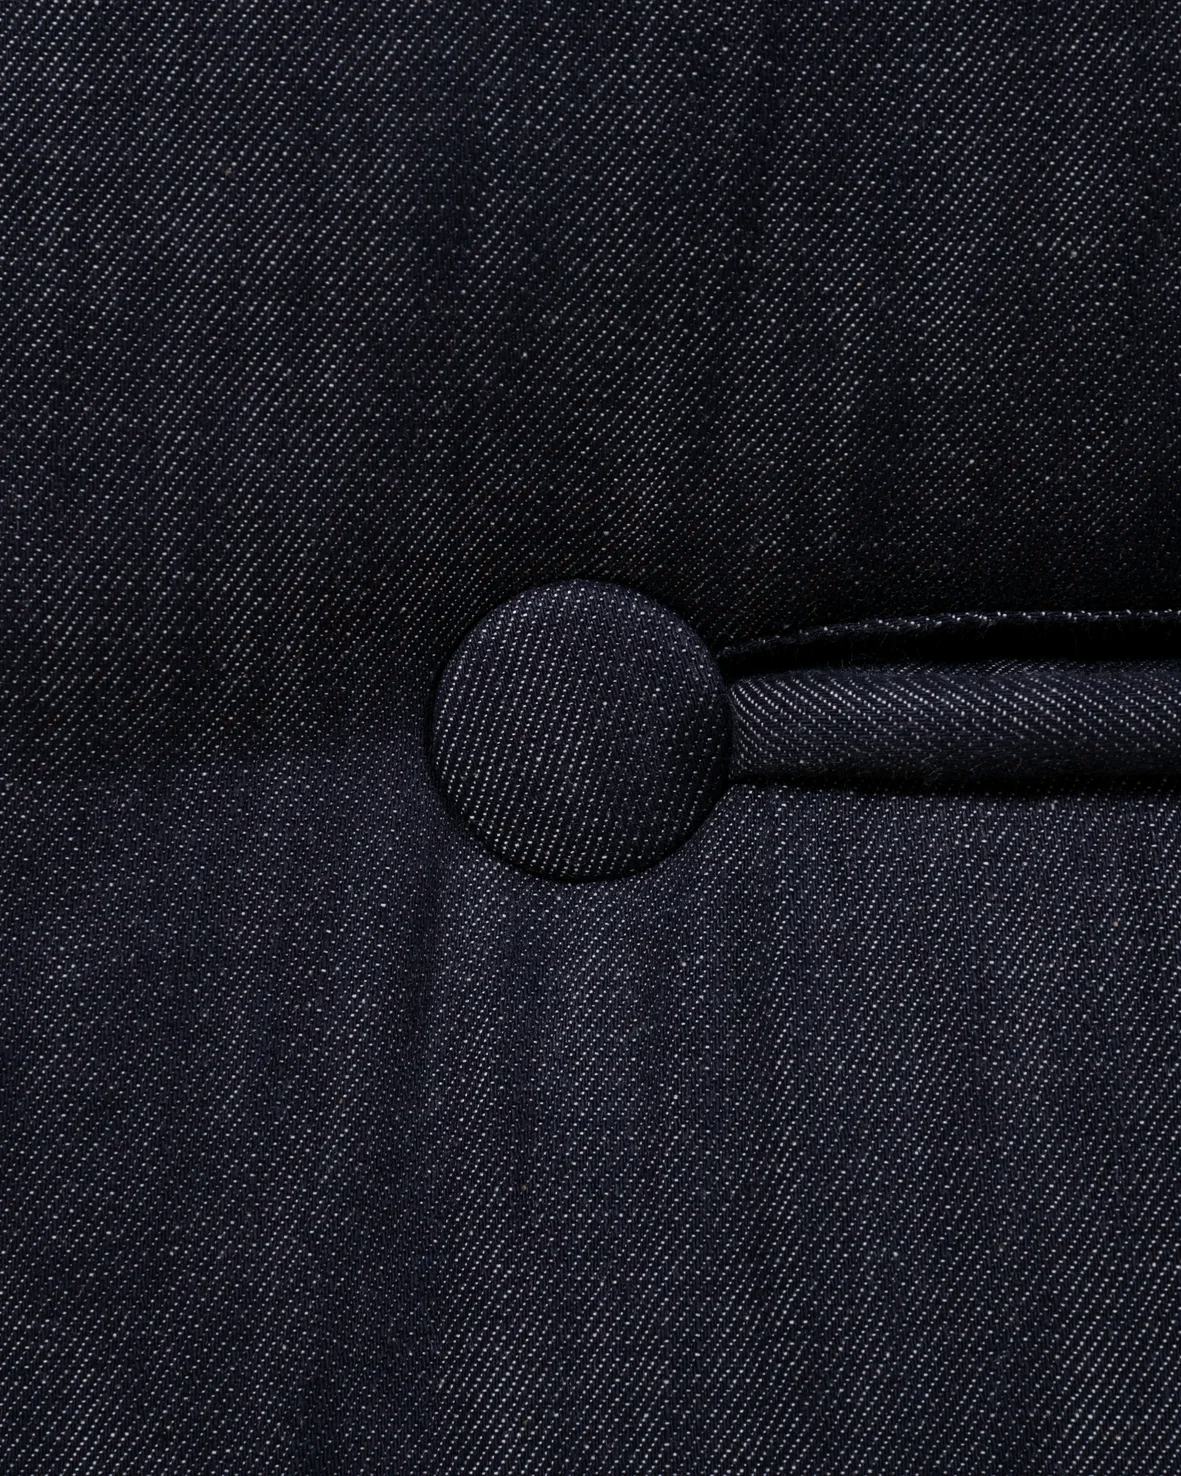 Sofa So Good detail fabric Indigo Denim 2